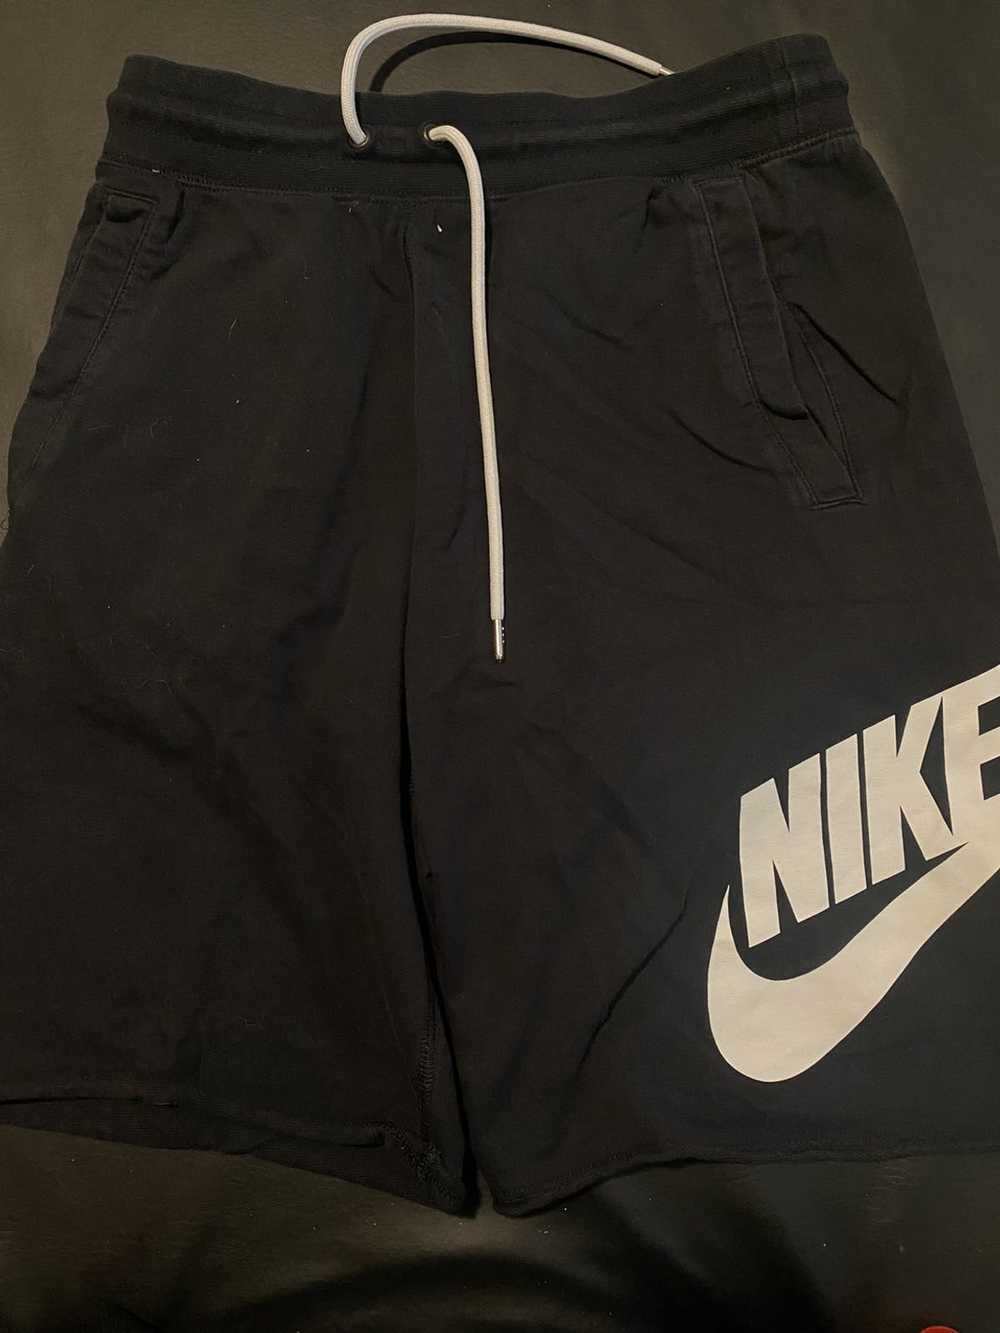 Nike Nike sportswear shorts - image 3